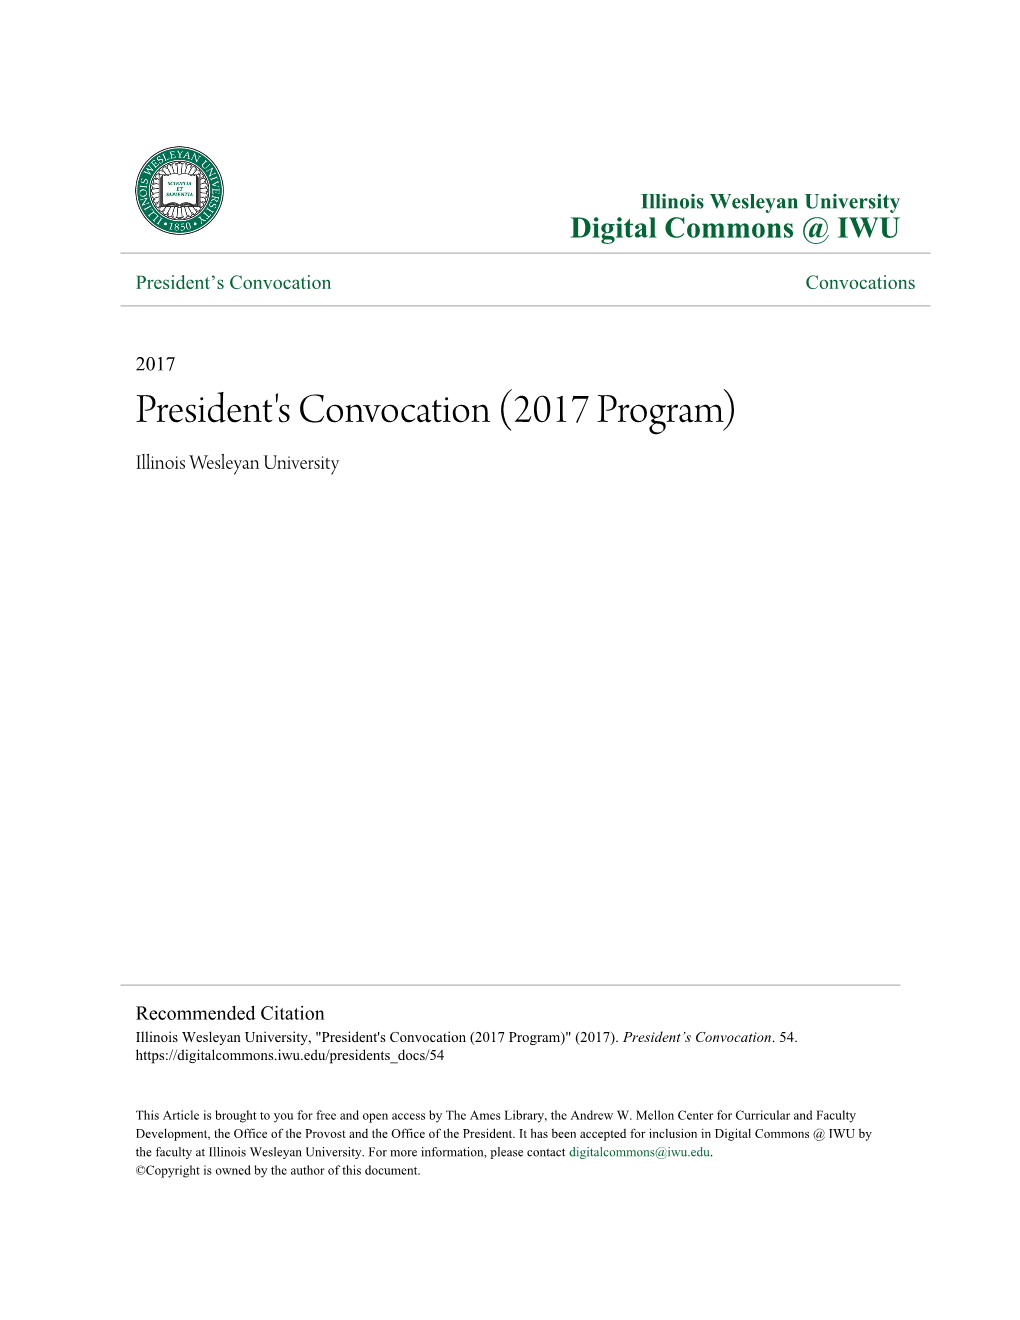 President's Convocation (2017 Program) Illinois Wesleyan University